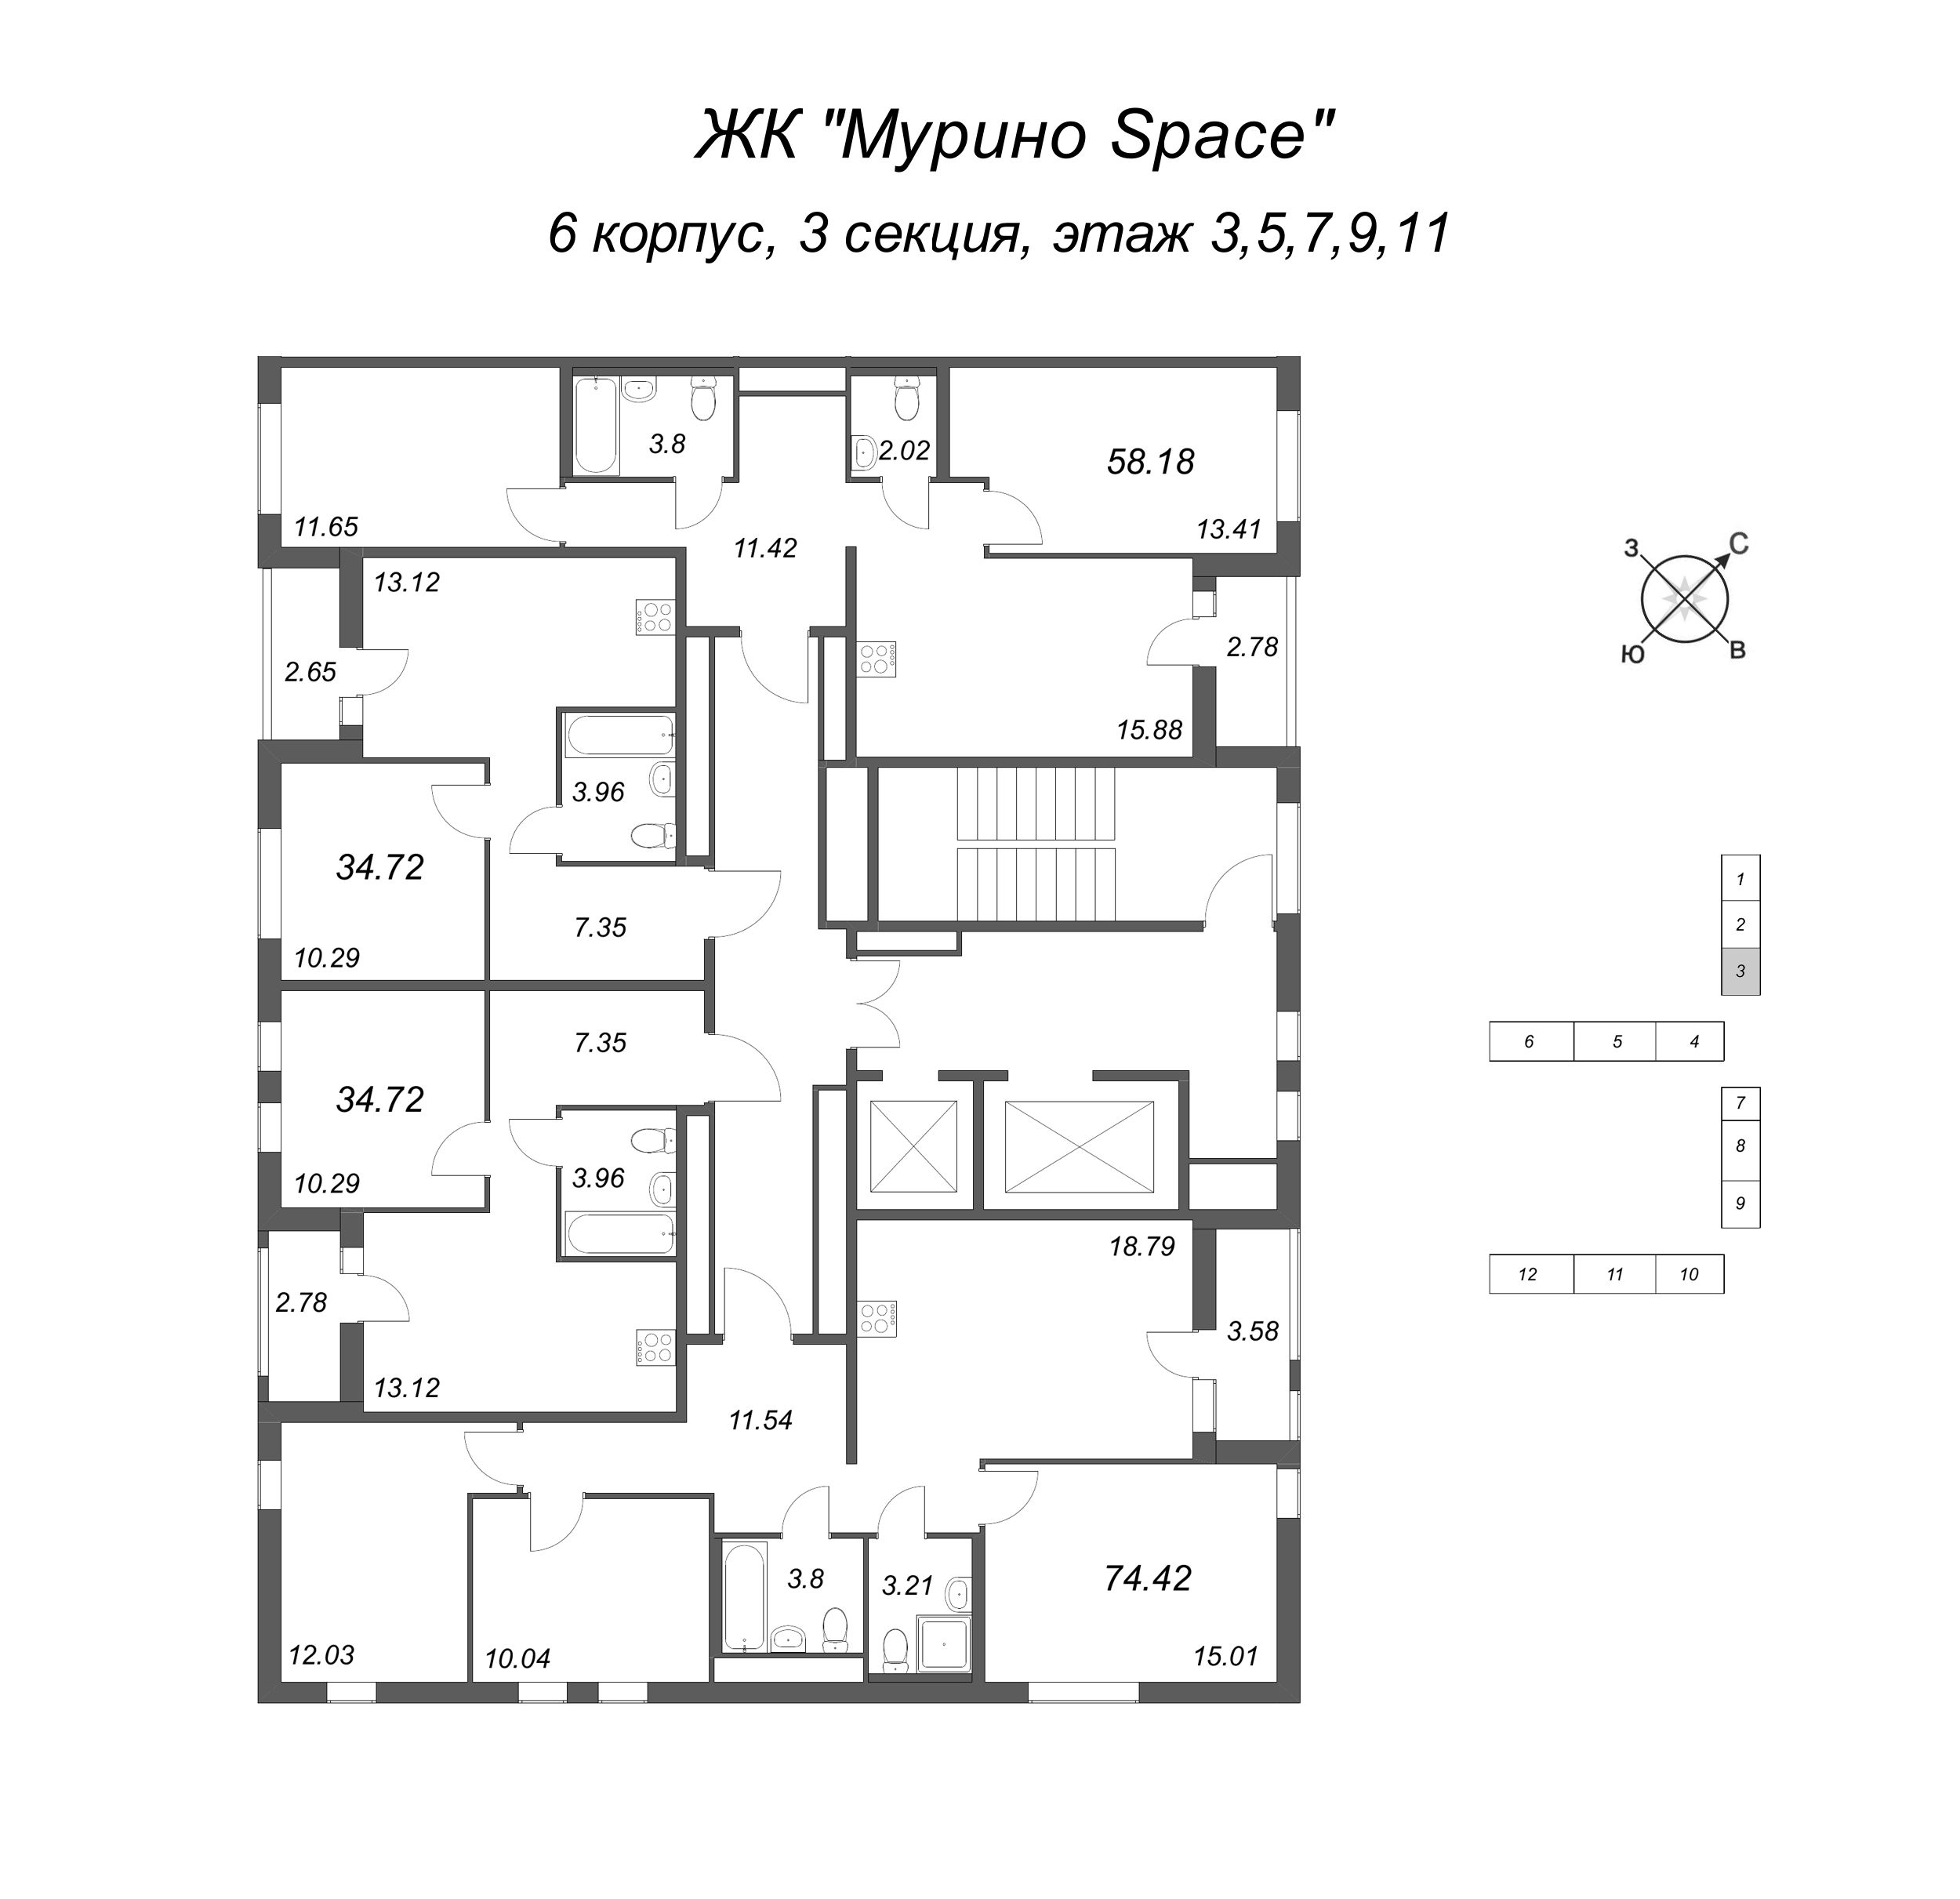 4-комнатная (Евро) квартира, 74.42 м² - планировка этажа